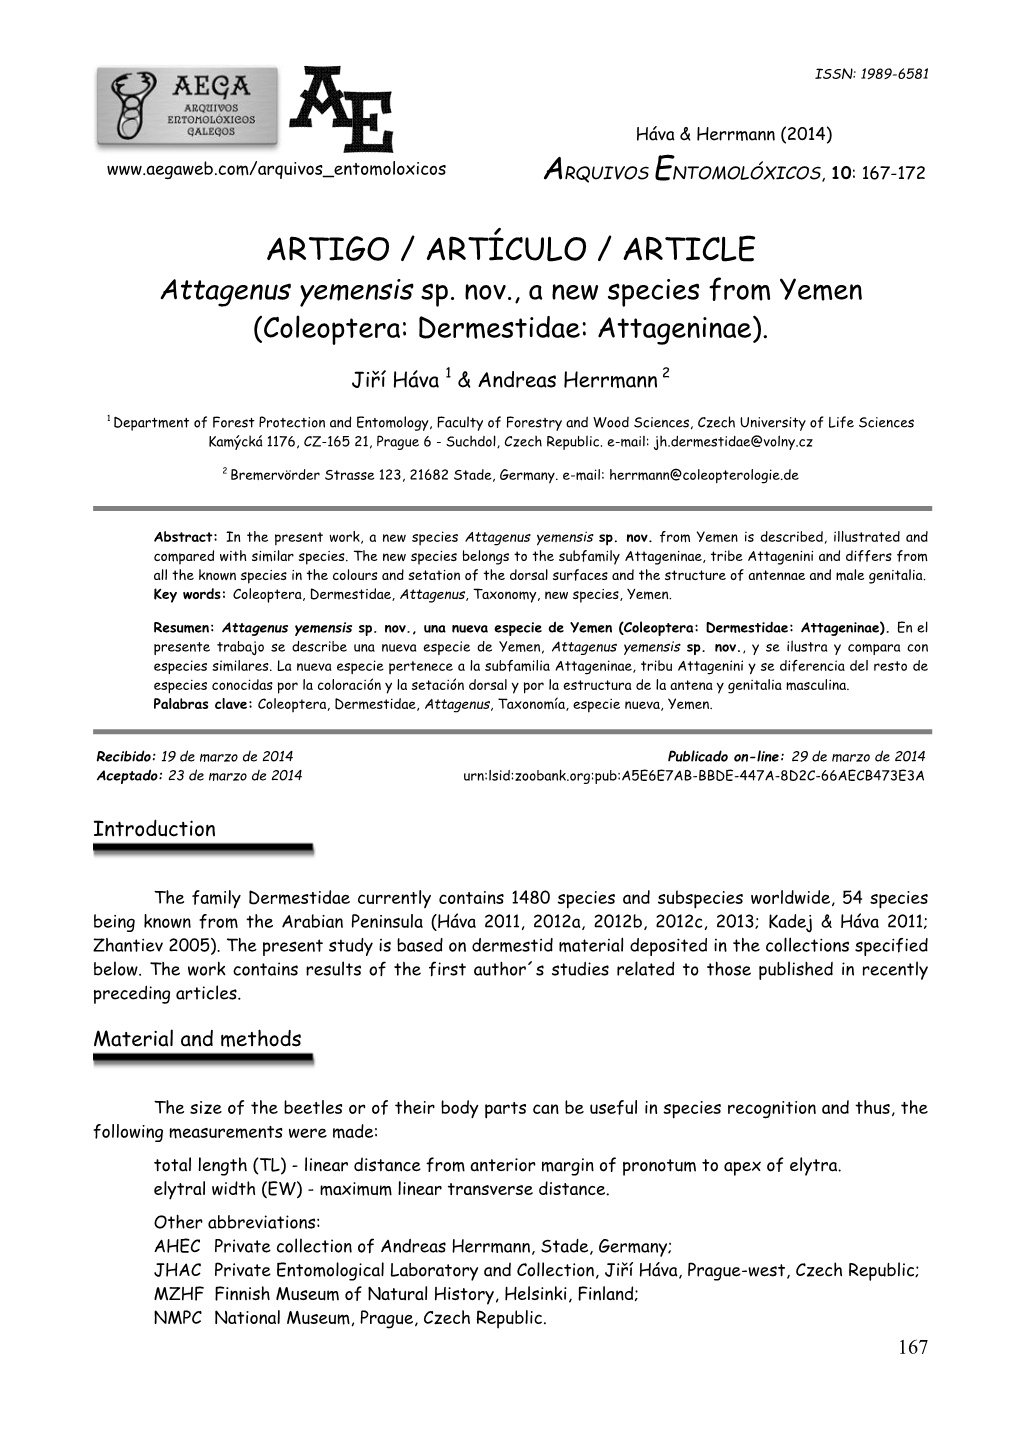 ARTIGO / ARTÍCULO / ARTICLE Attagenus Yemensis Sp